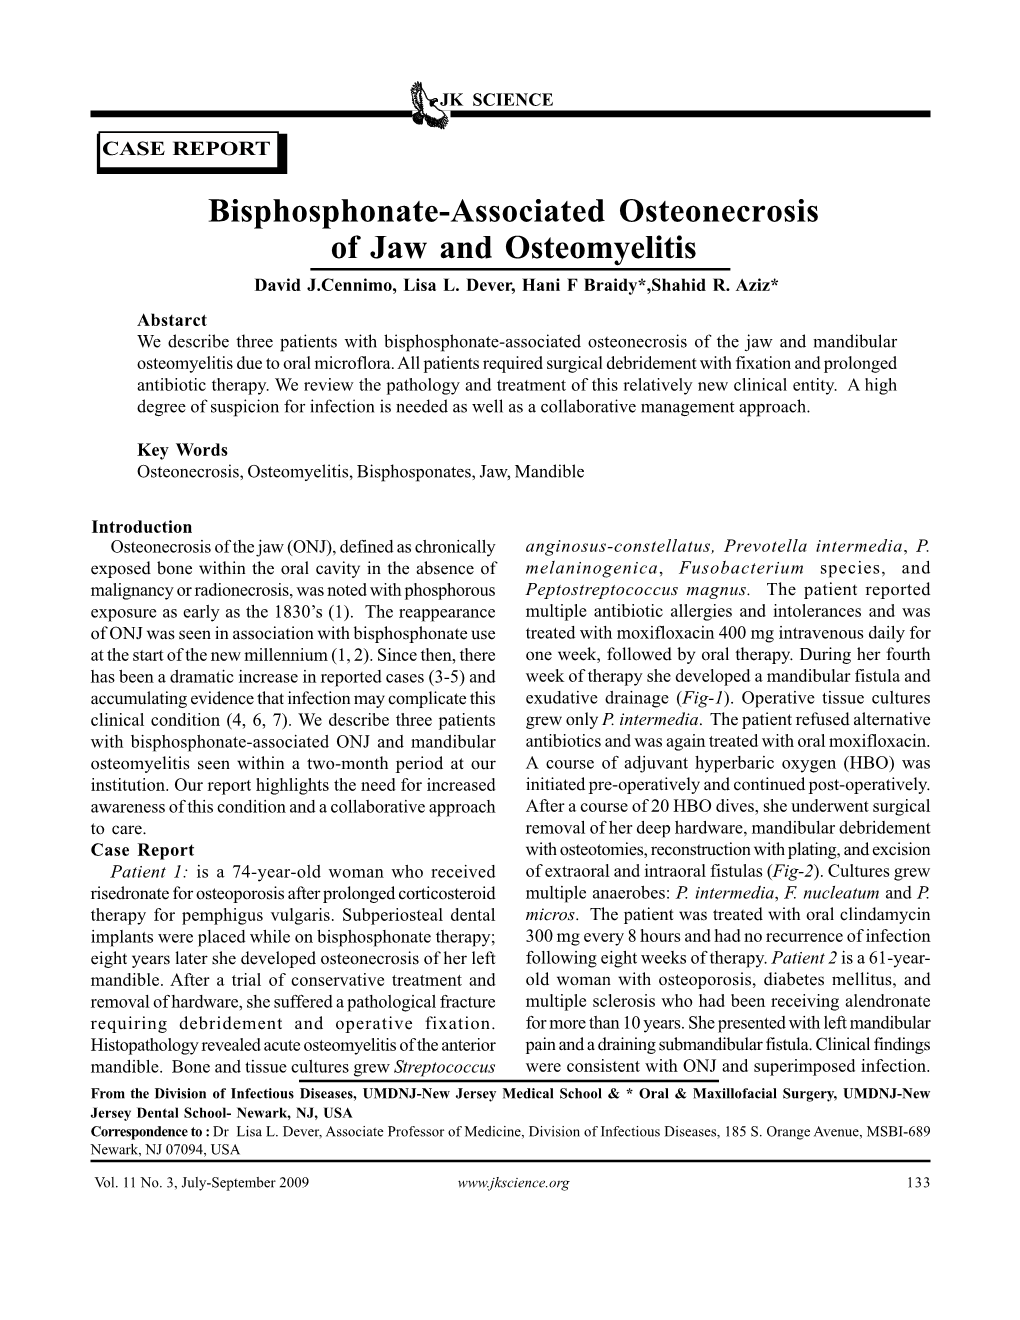 8-Case Report -Bisphospanate